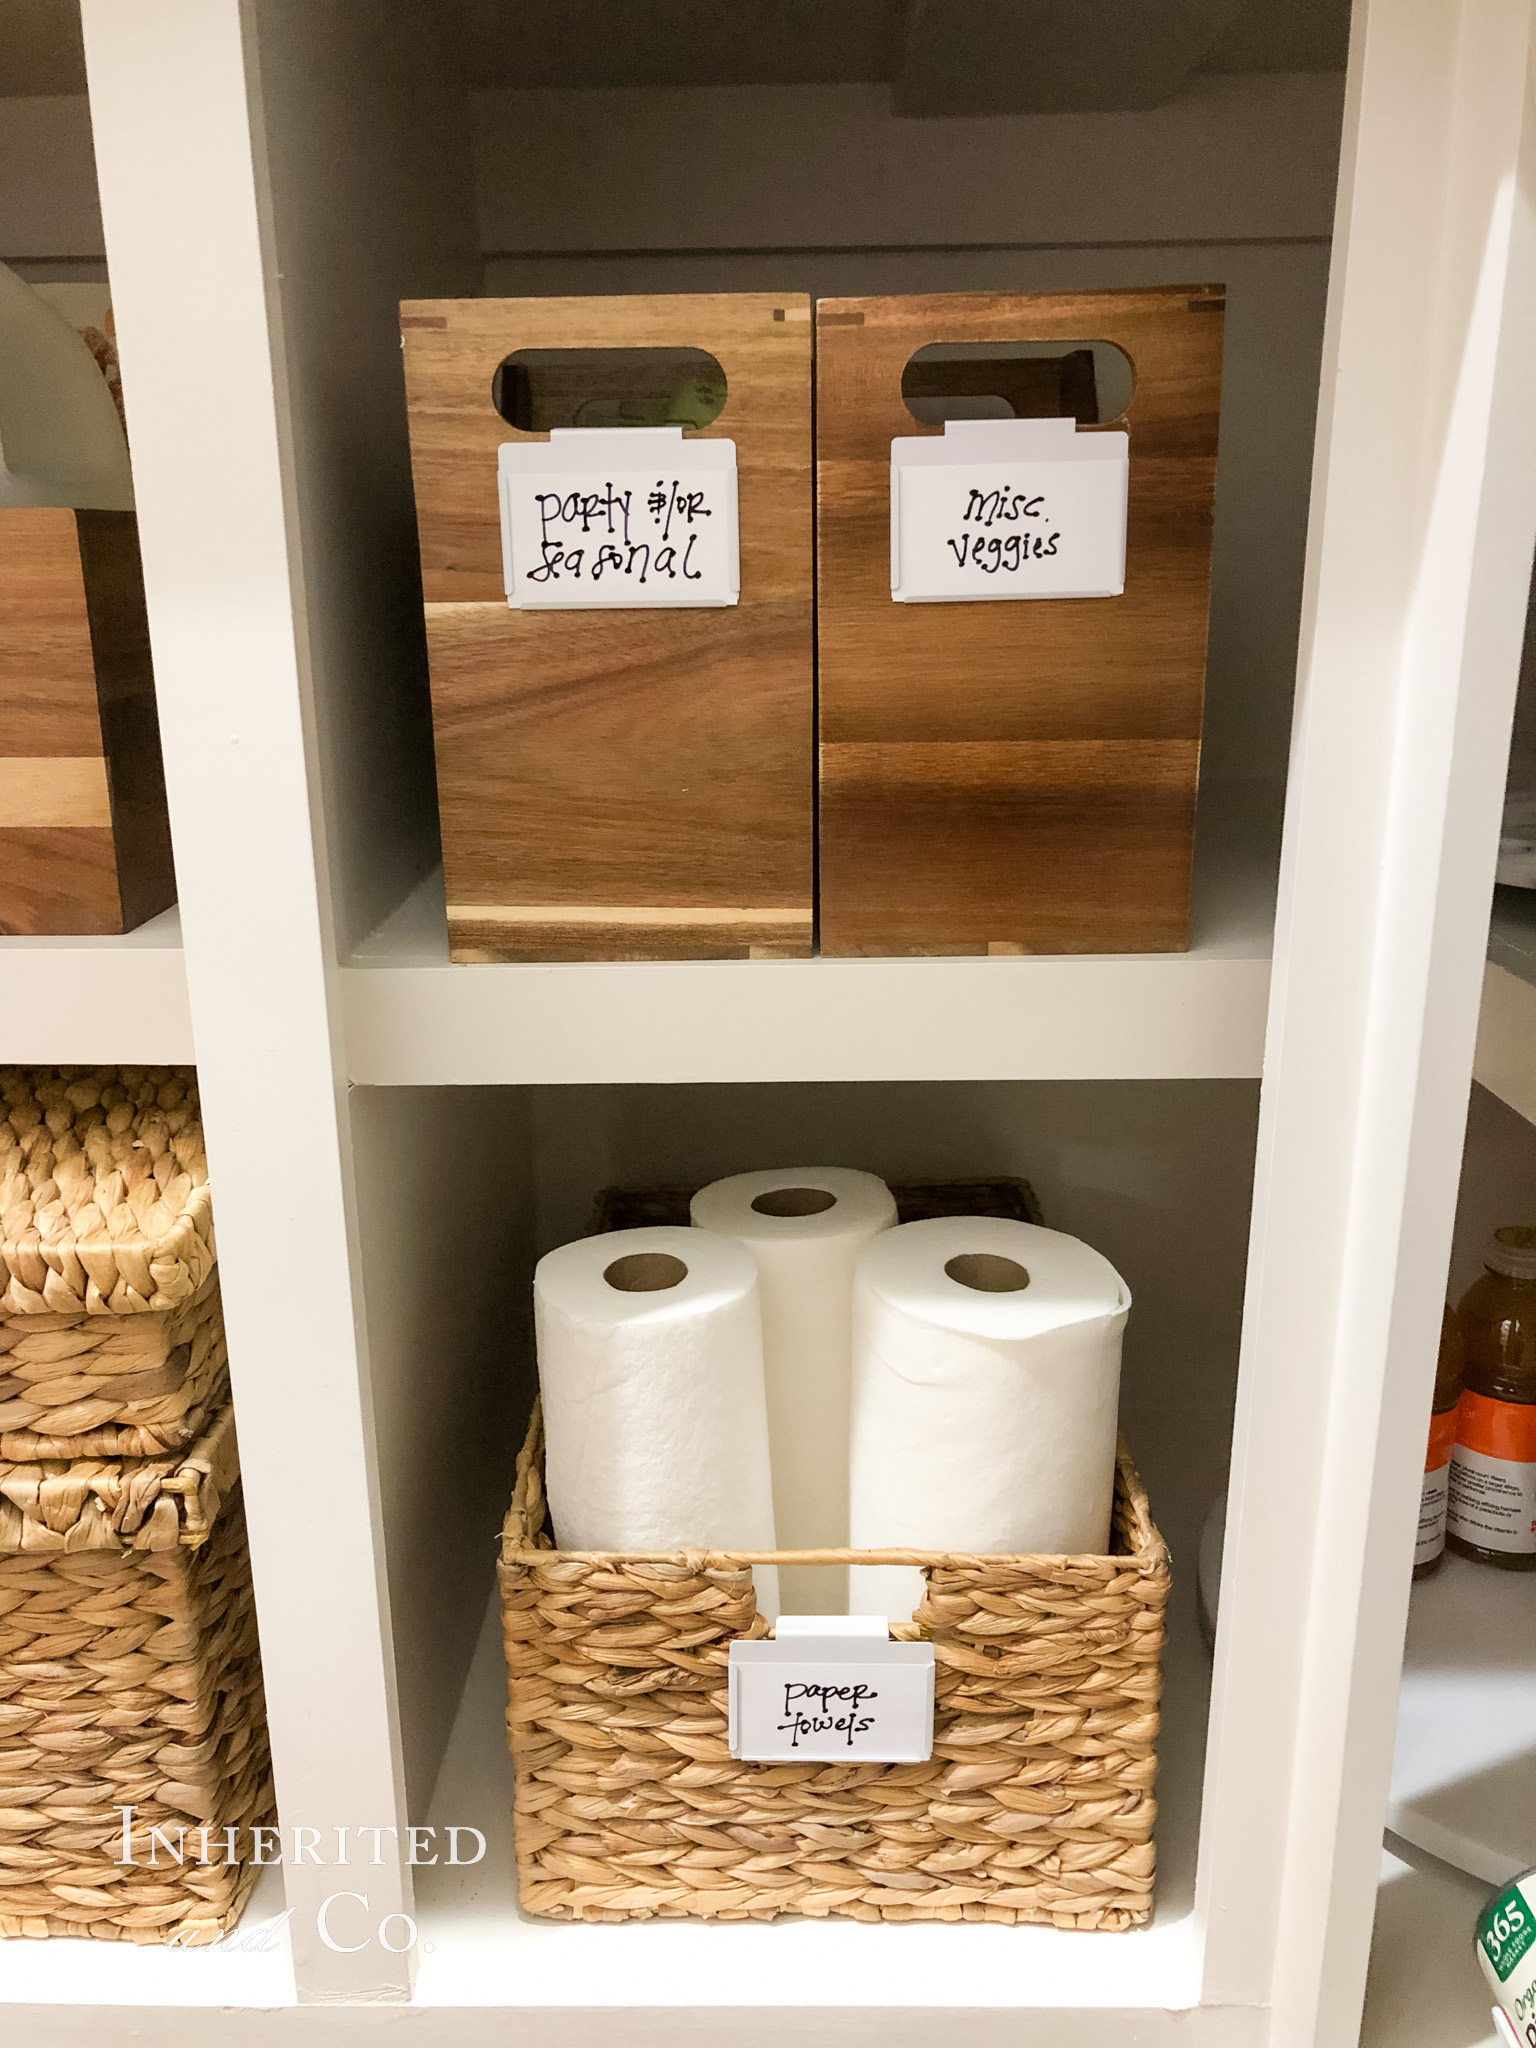 acacia file bins and paper towels in a hyacinth basket